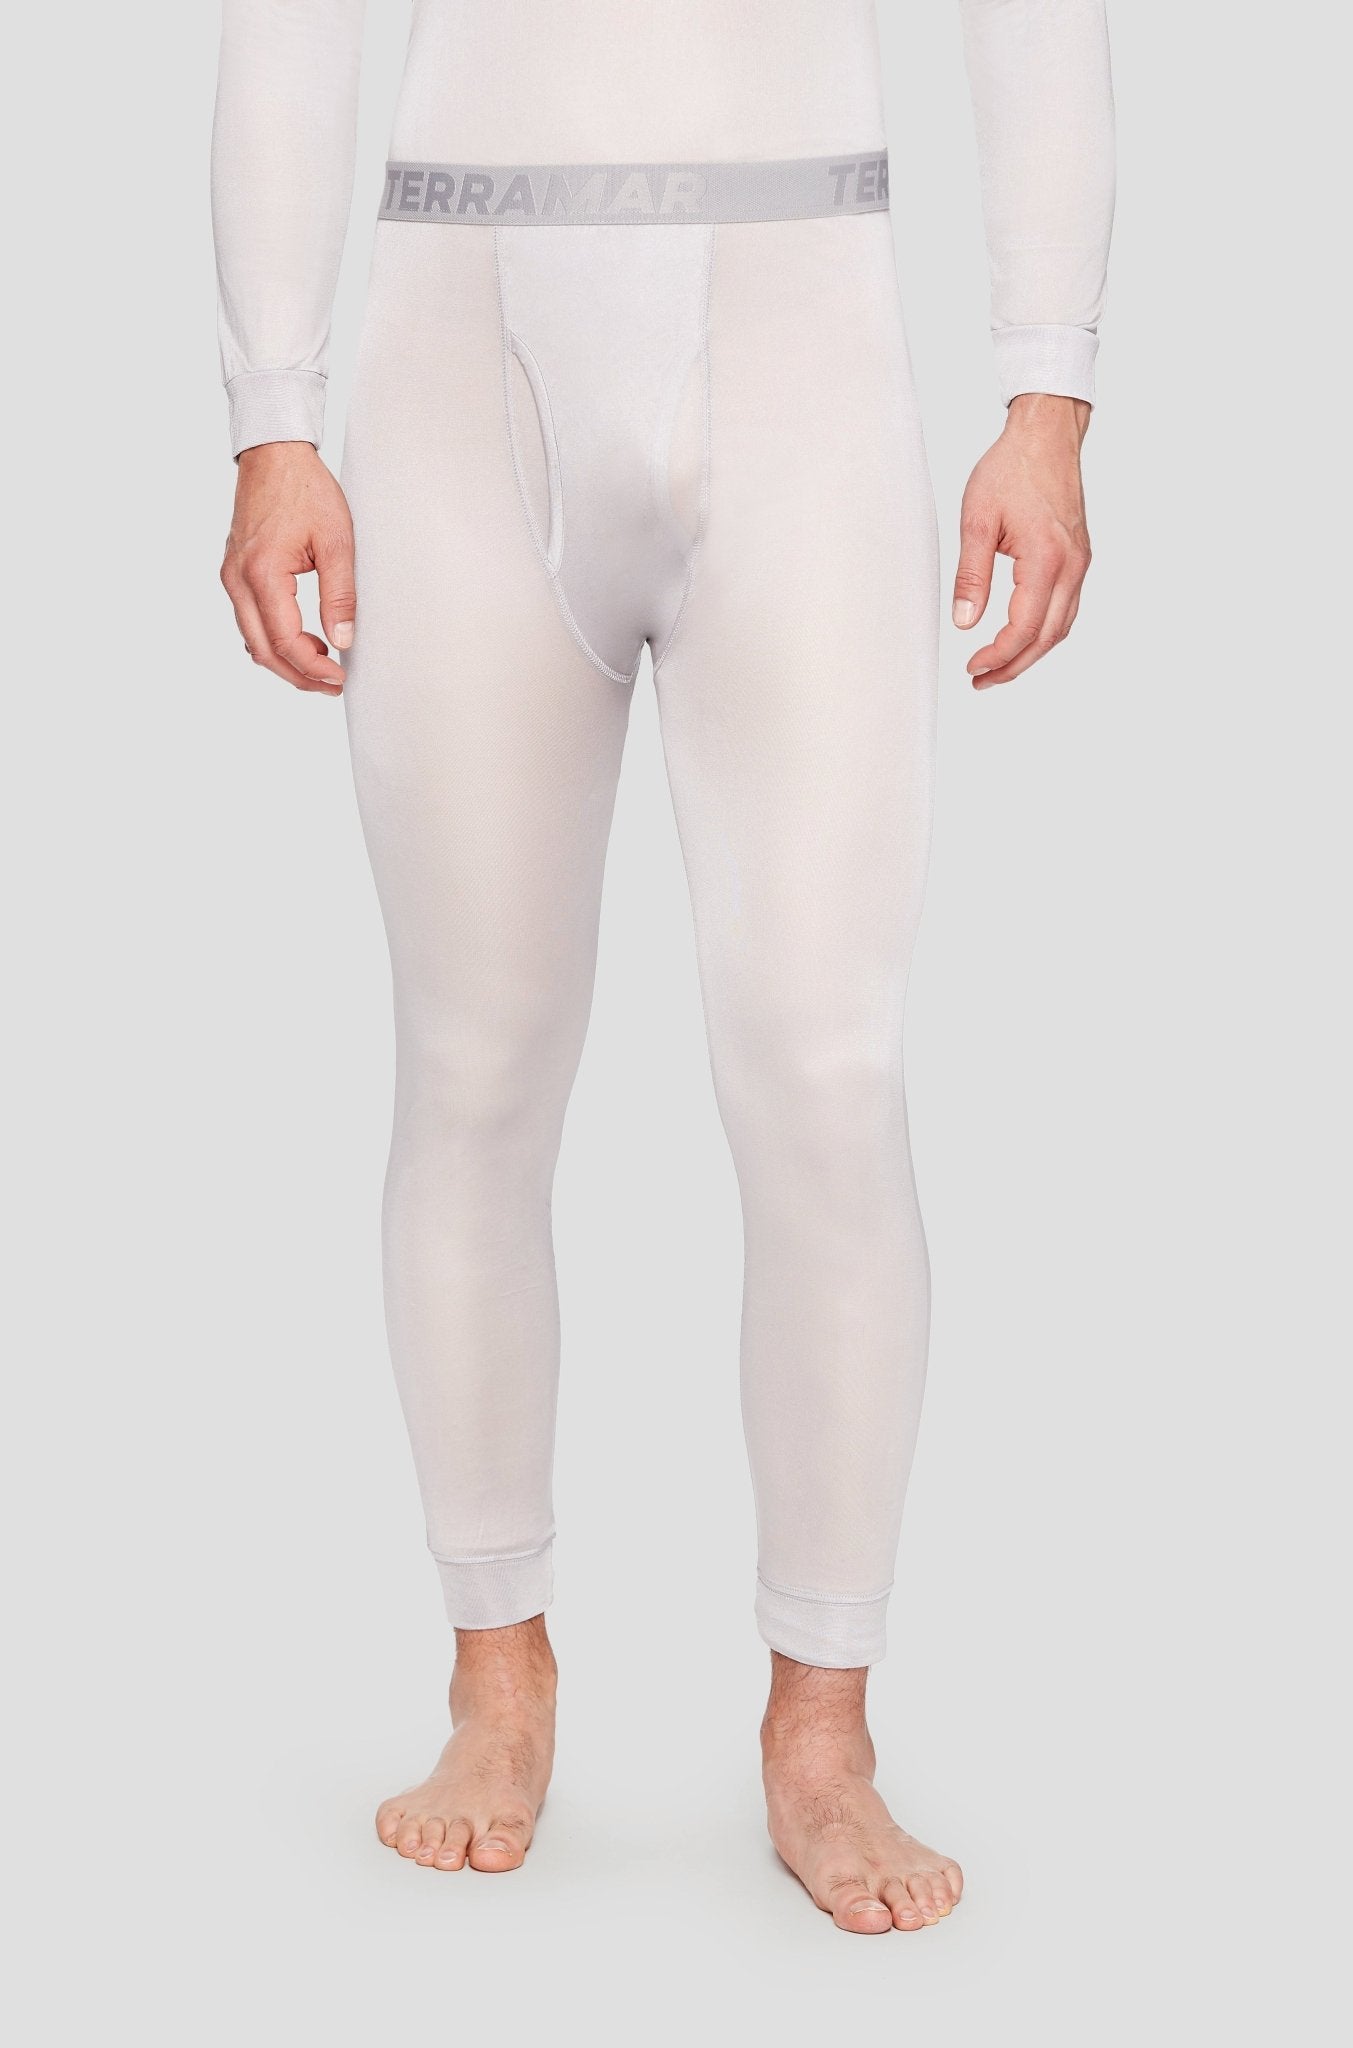 1.0 Men's Thermasilk® Heritage Lightweight Thermal Pants - Grey / S